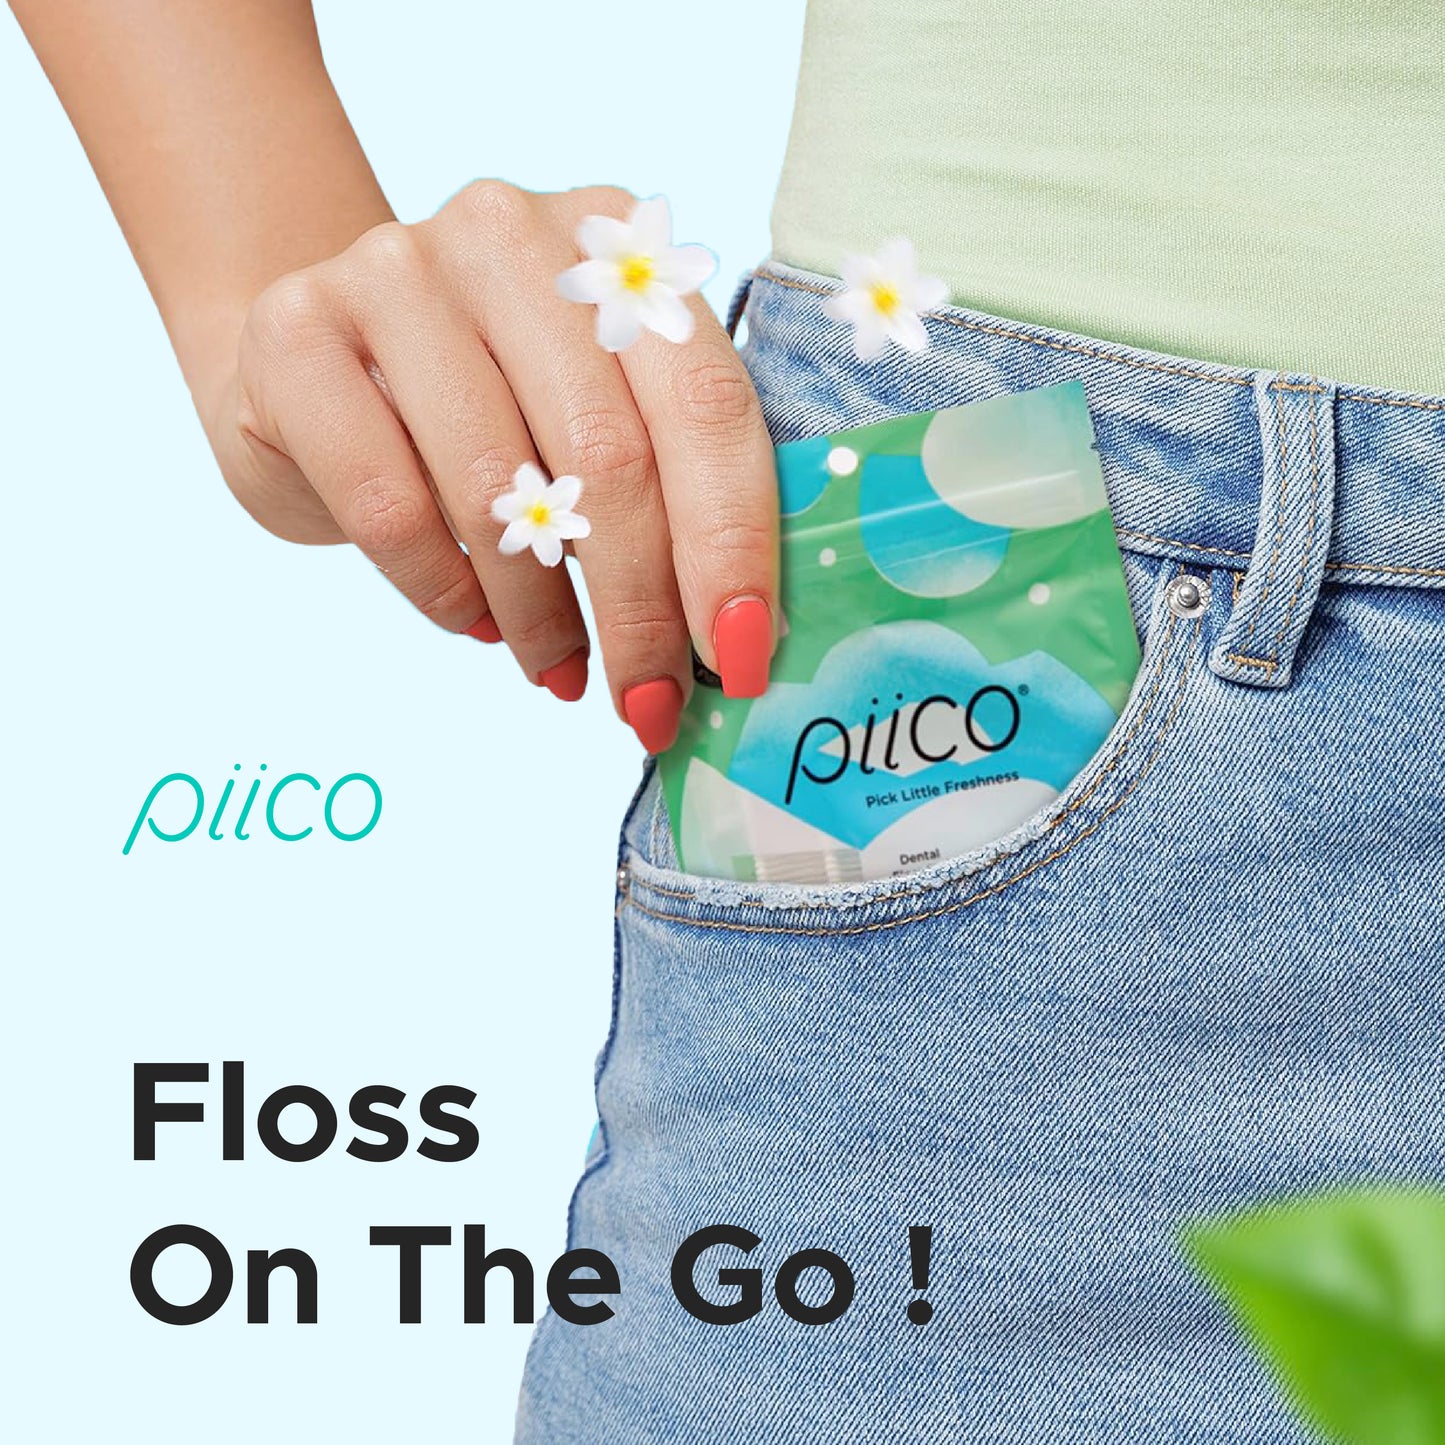 Piico Jasmine Flavored Dental Floss Picks (100 Count)